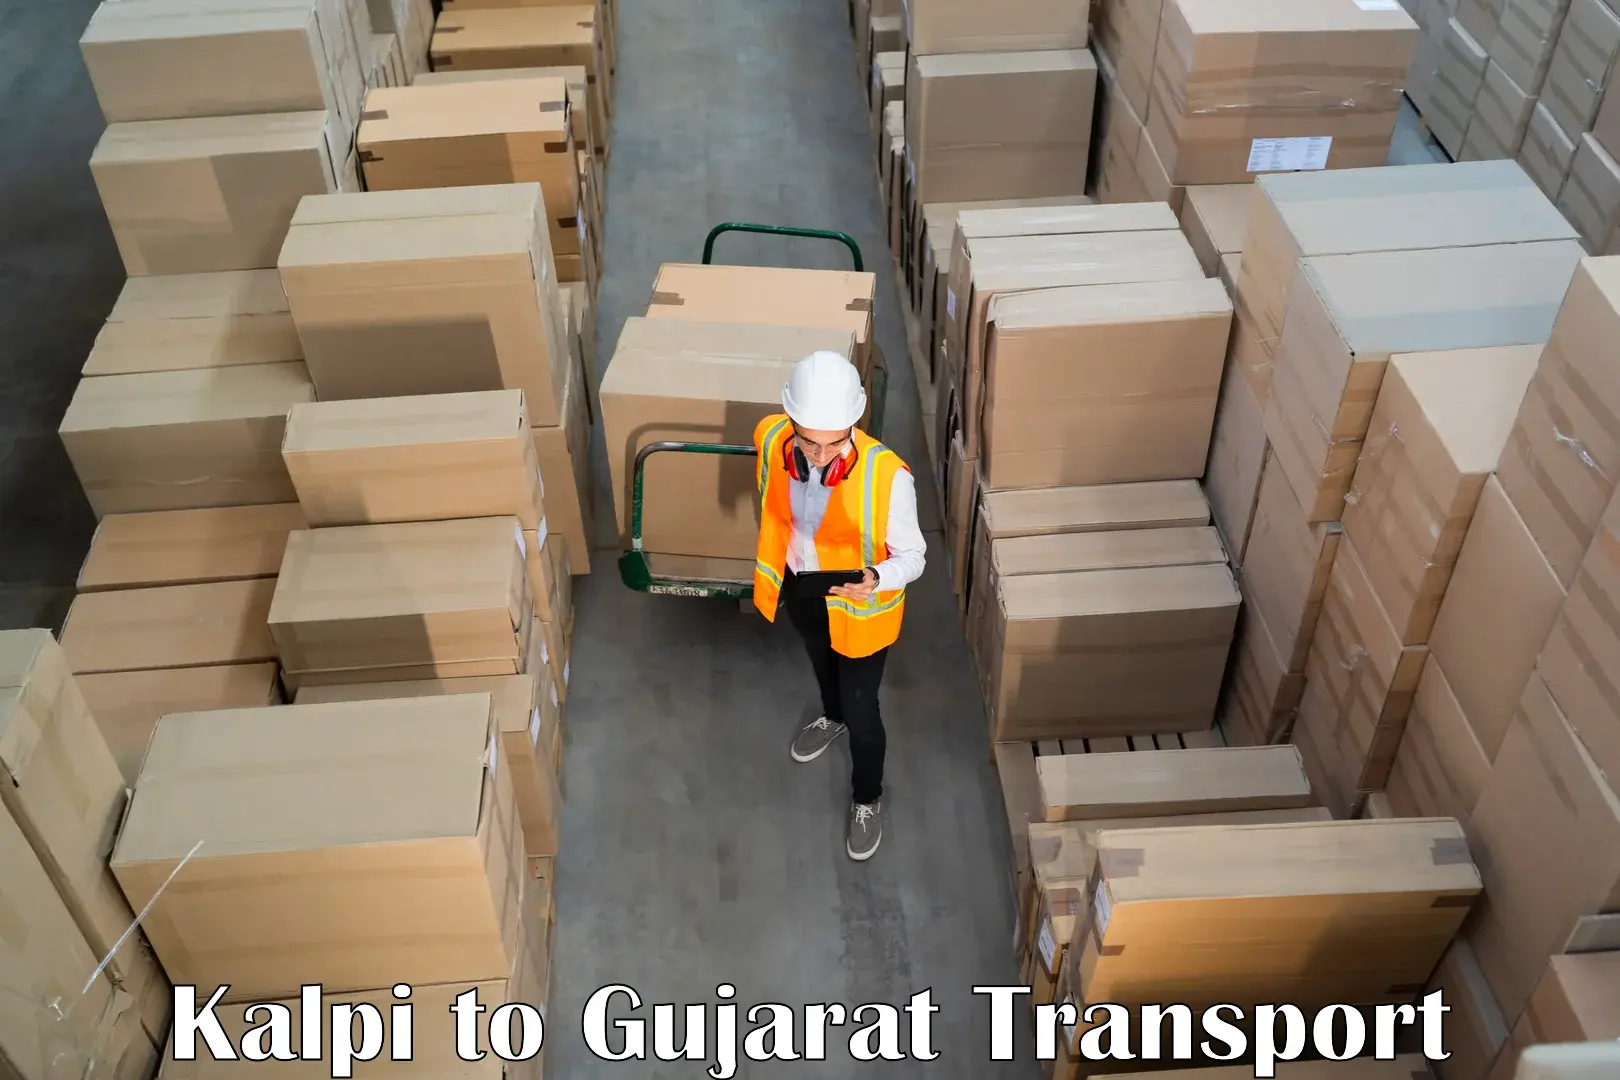 Truck transport companies in India Kalpi to Hazira